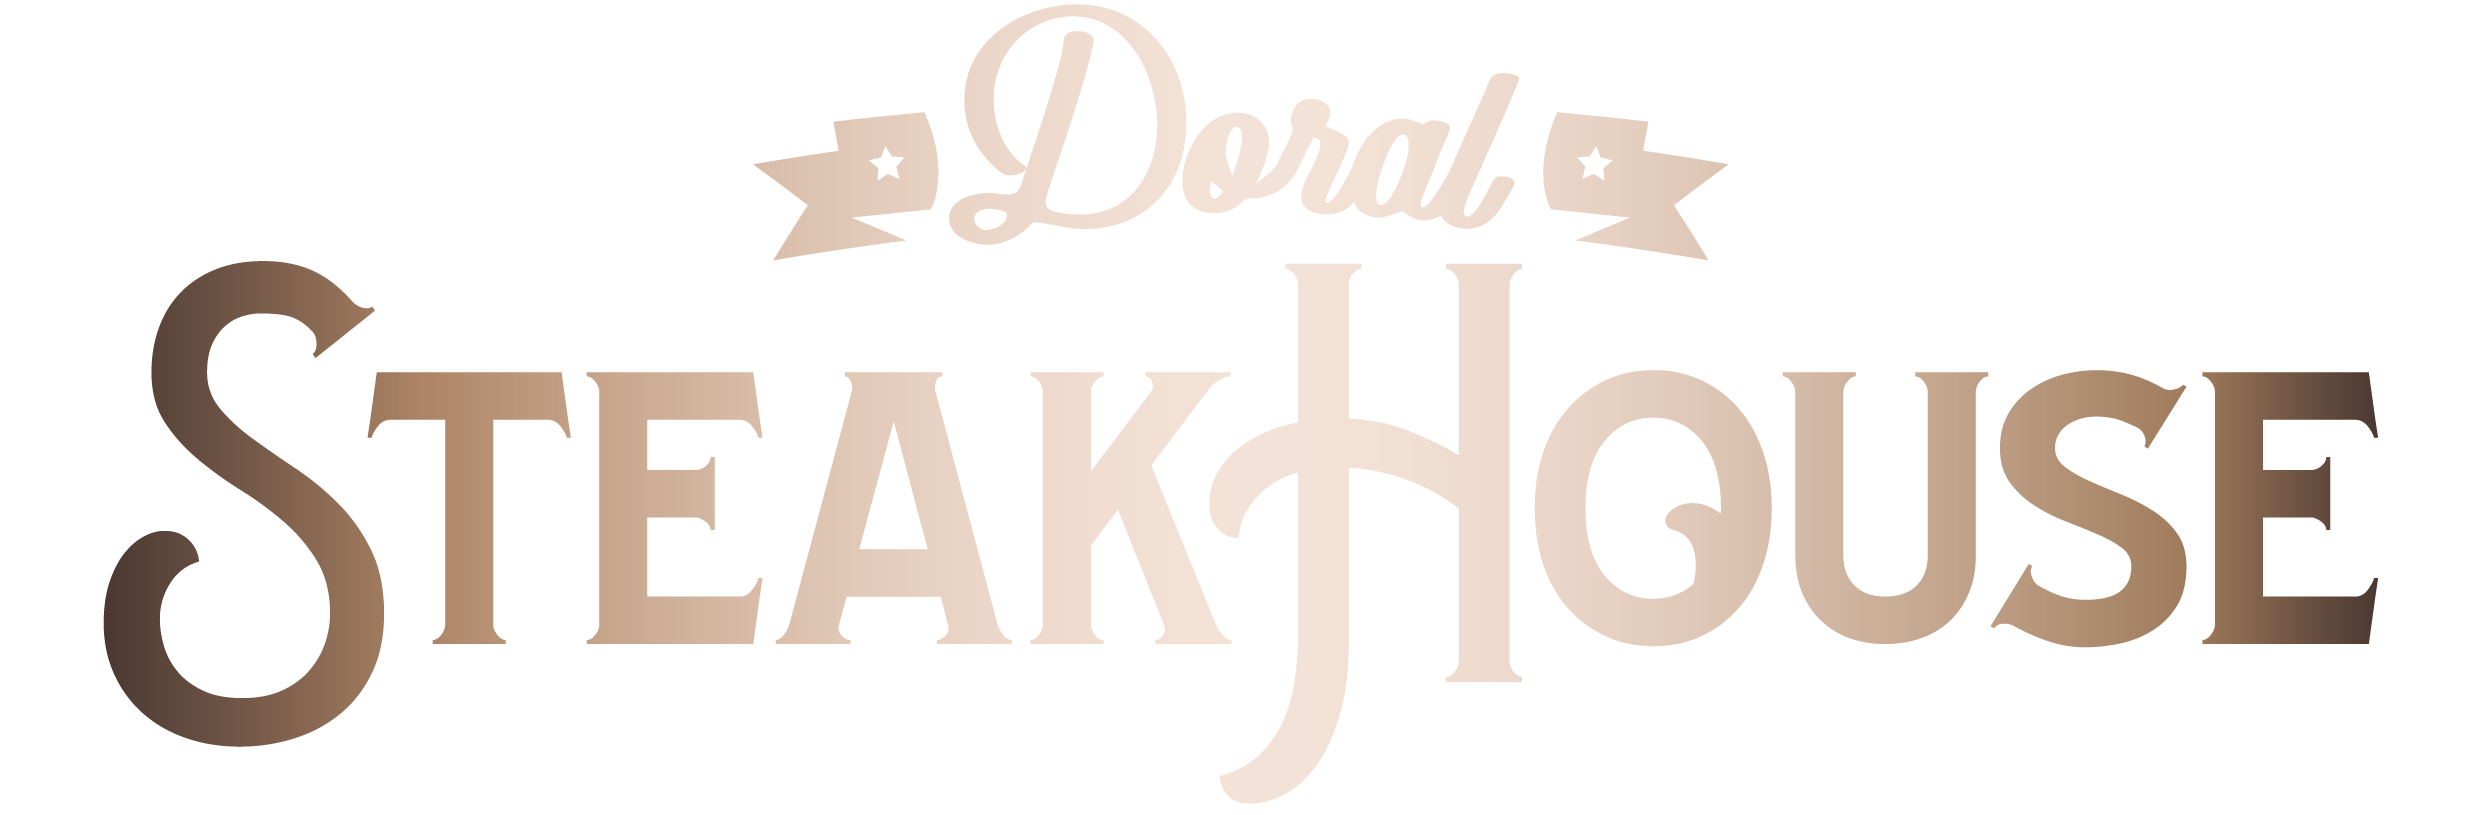 Doral Steak House